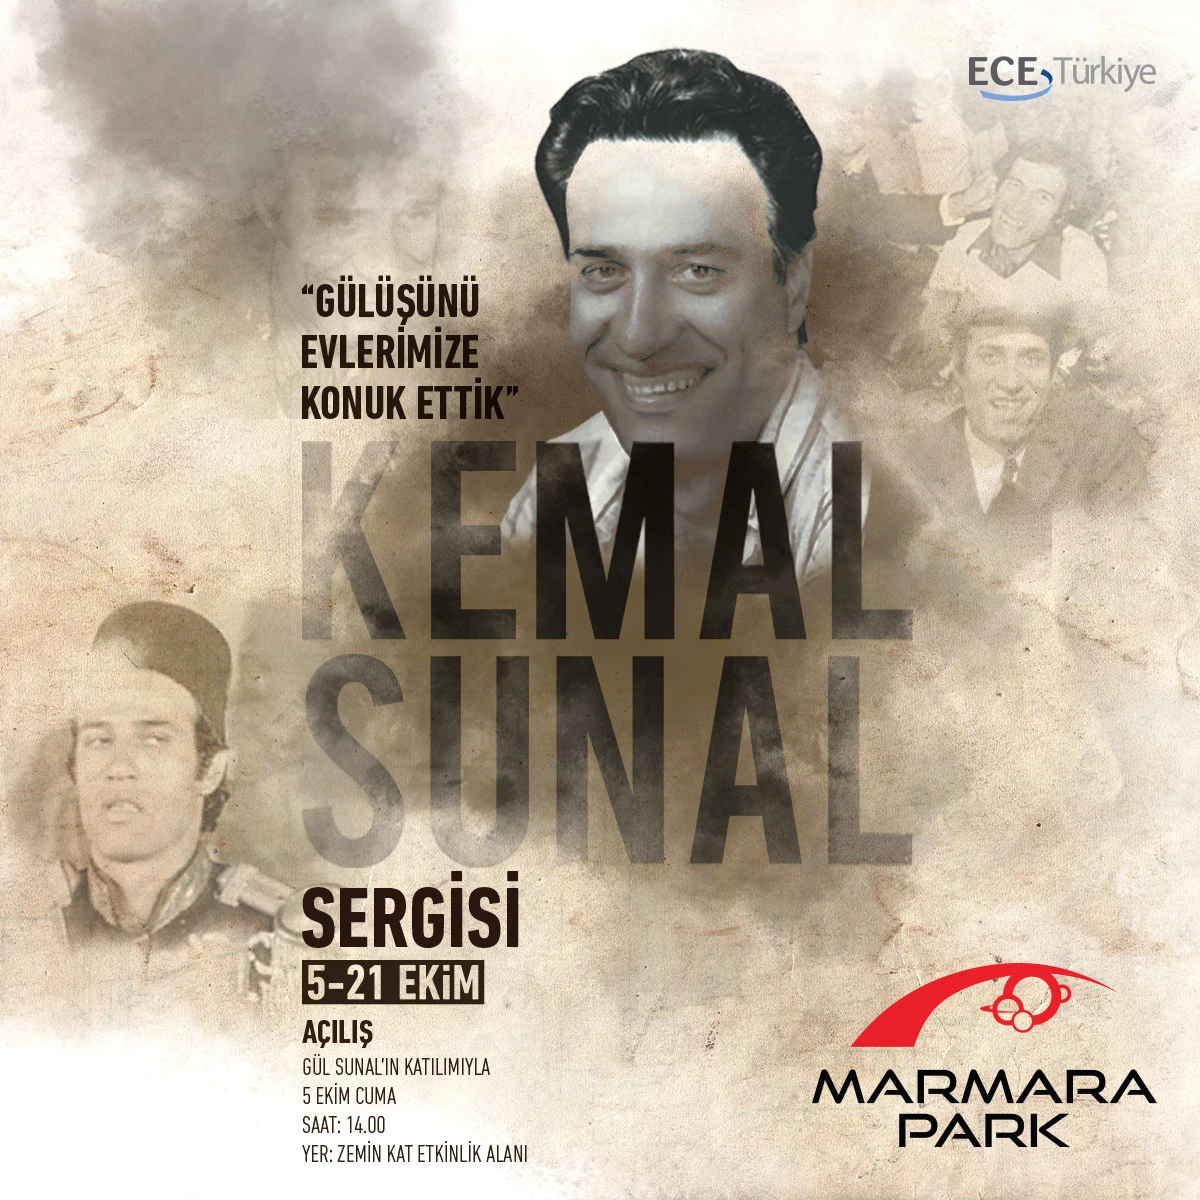 \'Kemal Sunal\'ın Sergisi Marmara Park\'ta!